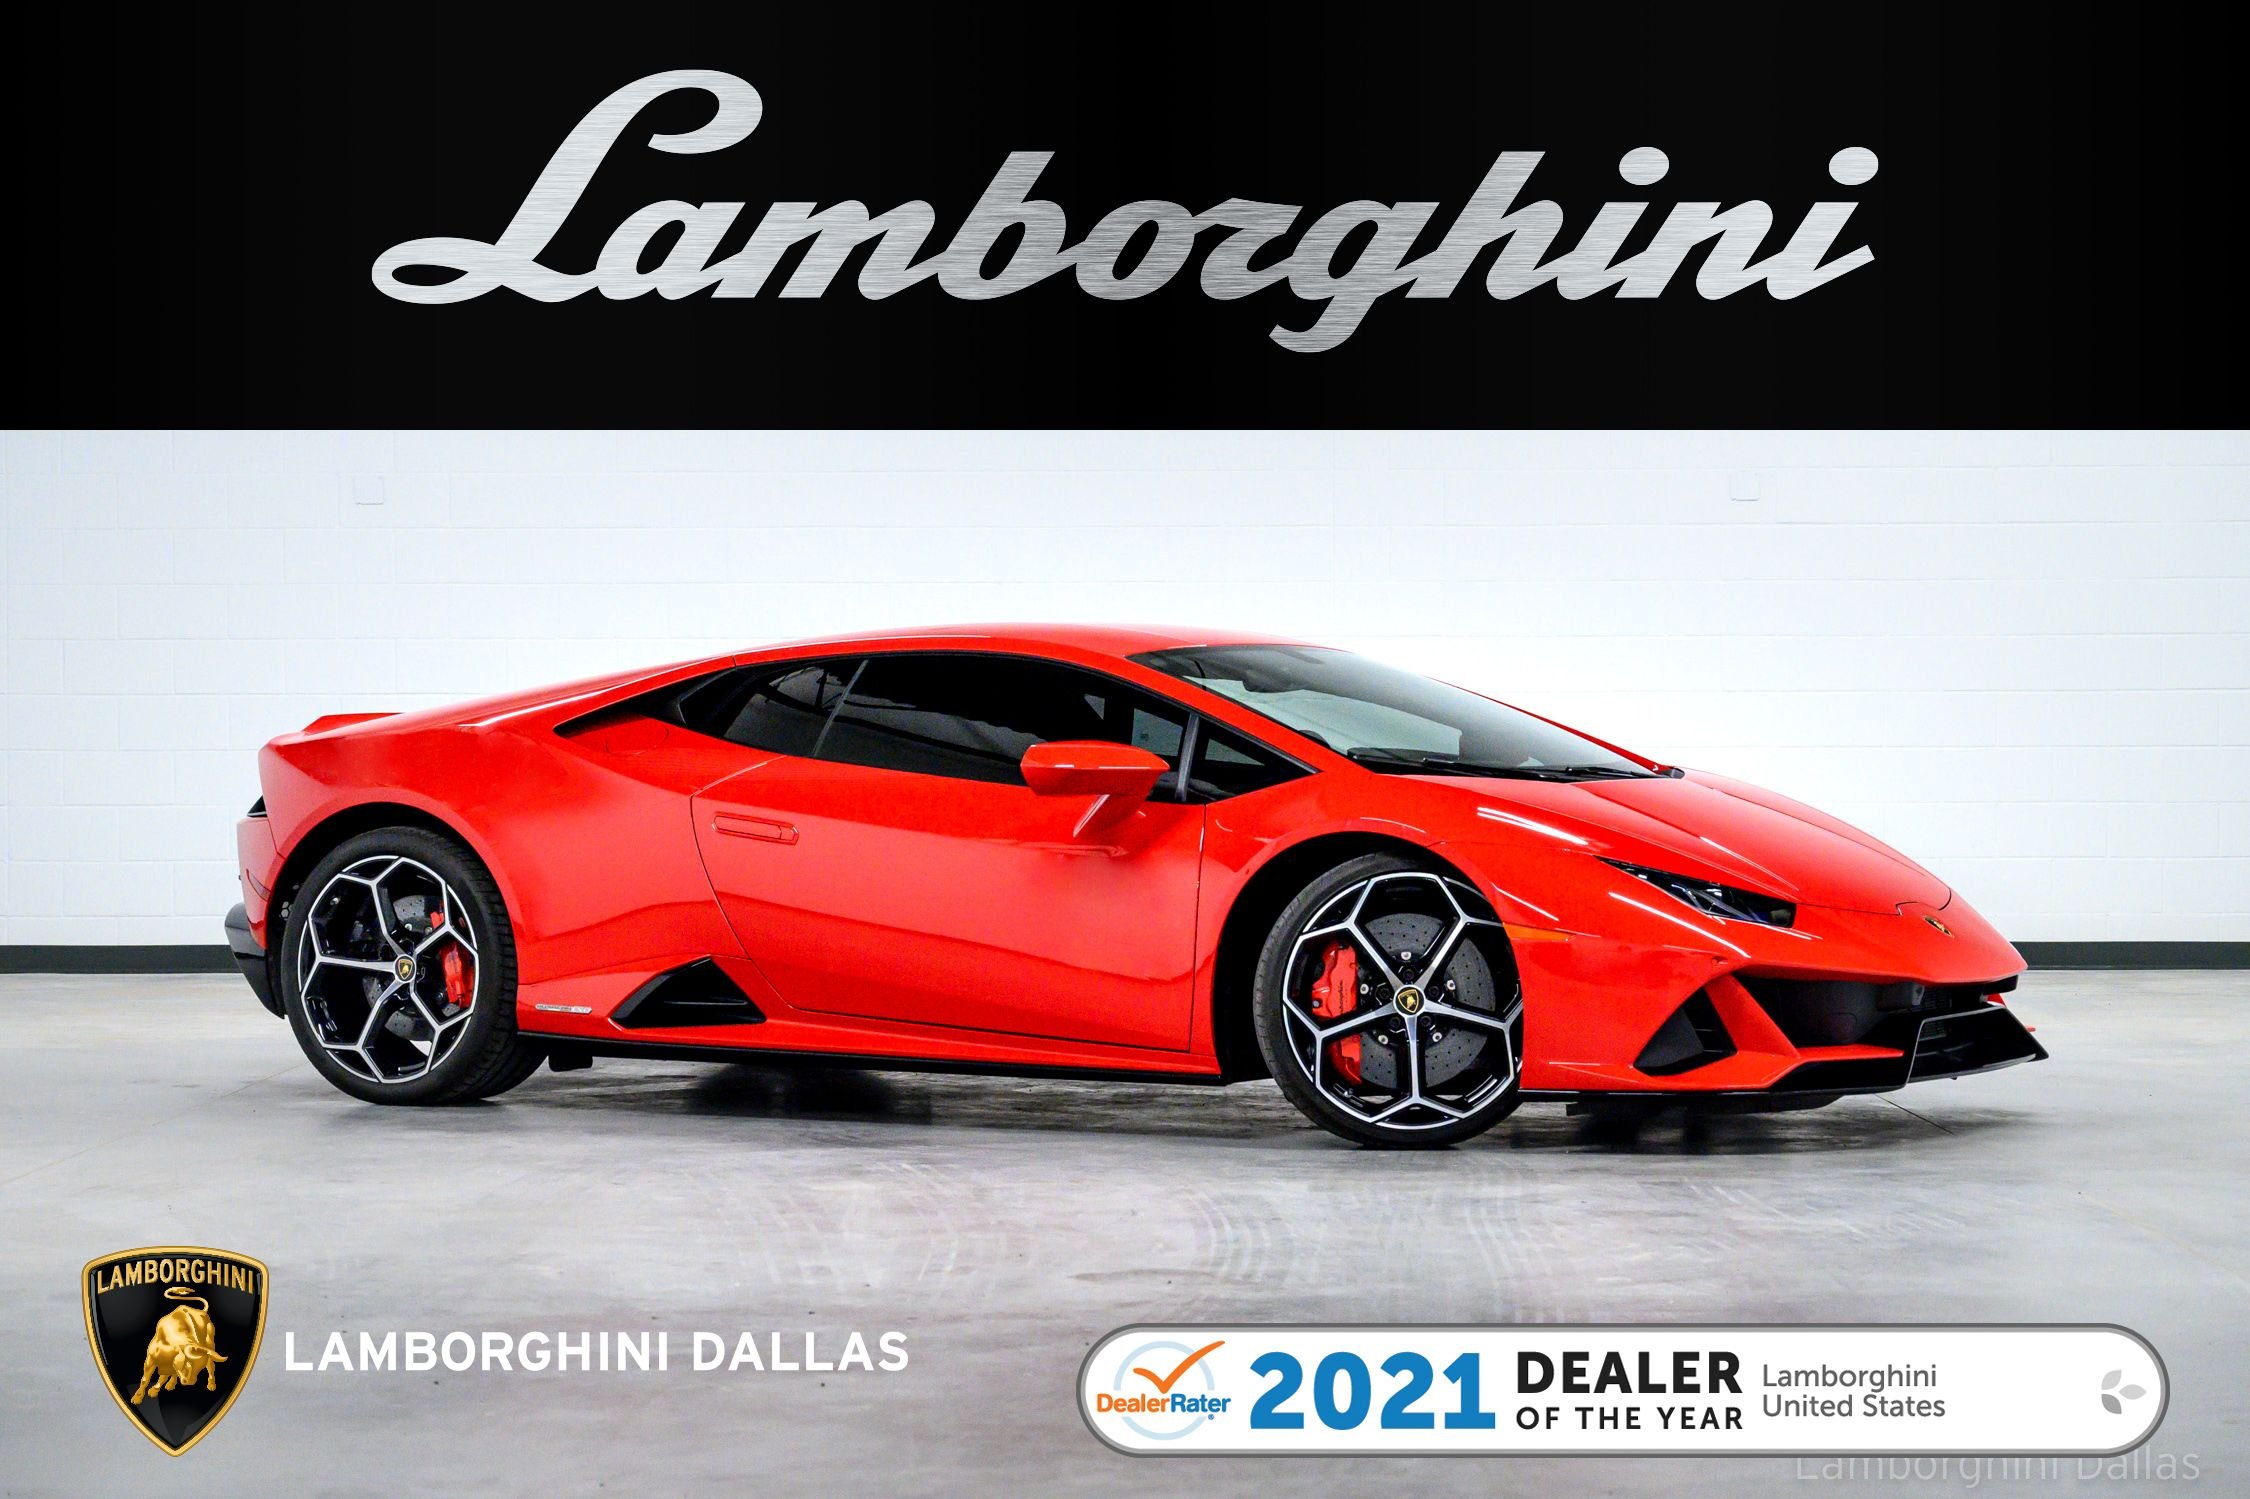 Used 2020 Lamborghini Huracan EVO For Sale Richardson,TX | Stock 